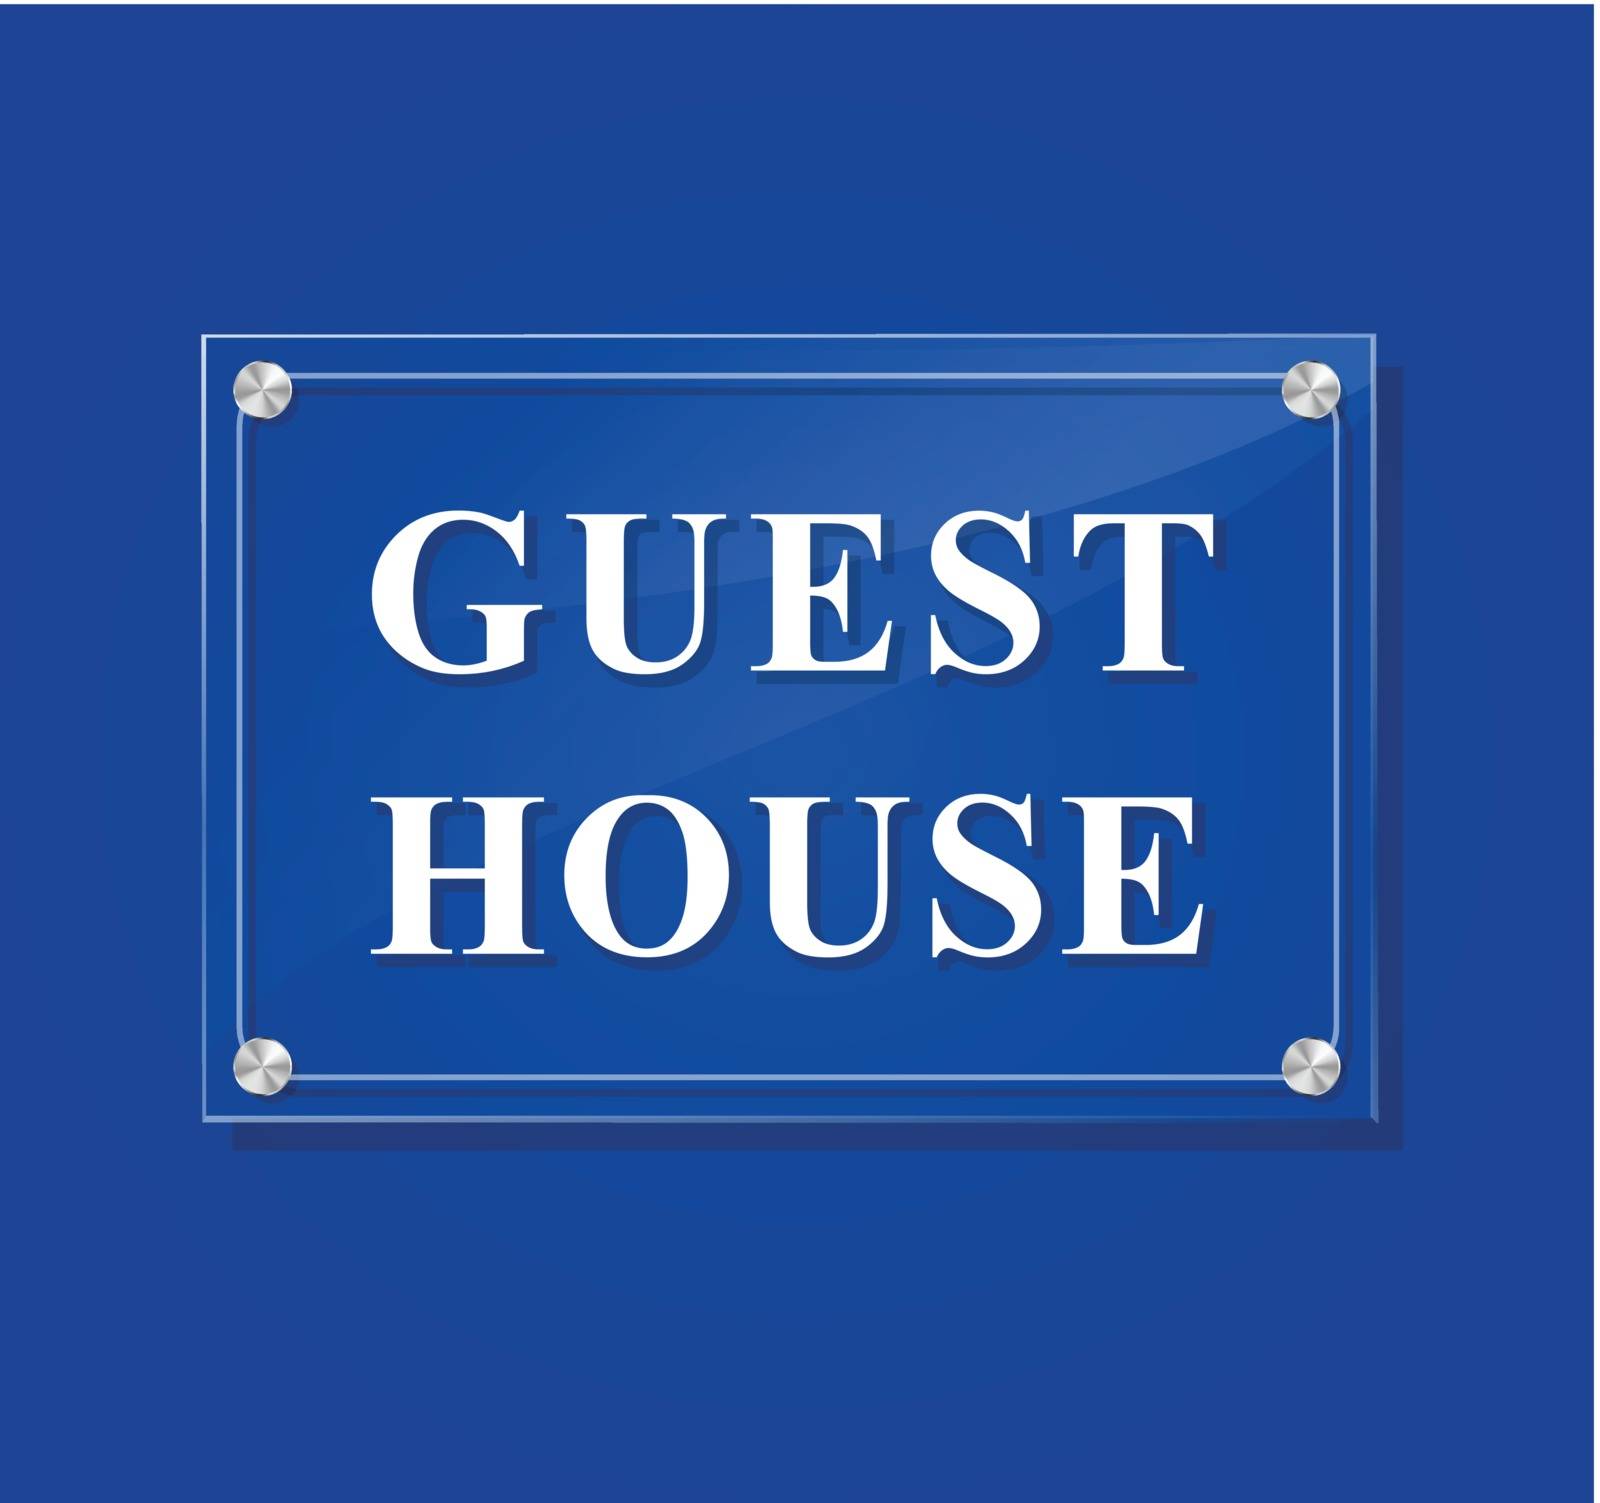 illustration of guest house transparent sign on blue background